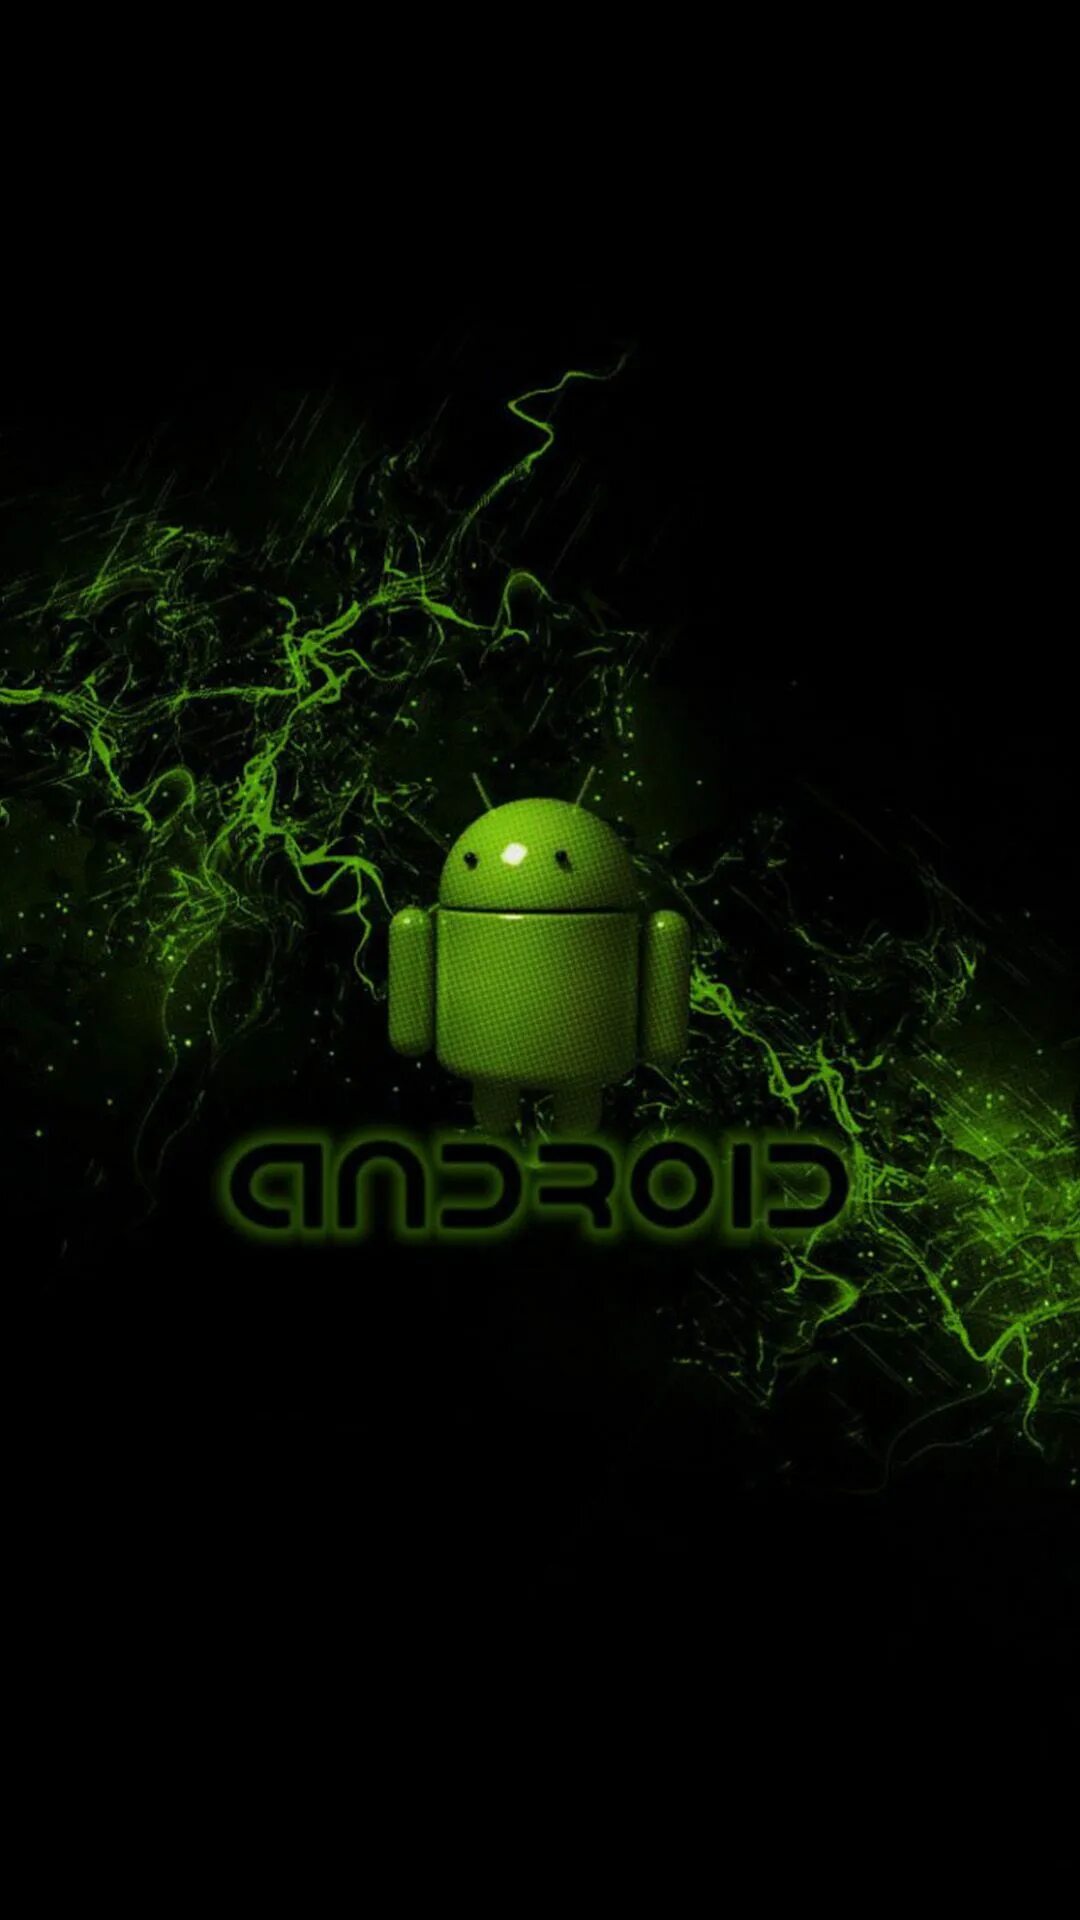 Логотип андроид на заставку. Логотип андроид. Андроид зеленый. Заставки на Android. Обои на смартфон андроид.